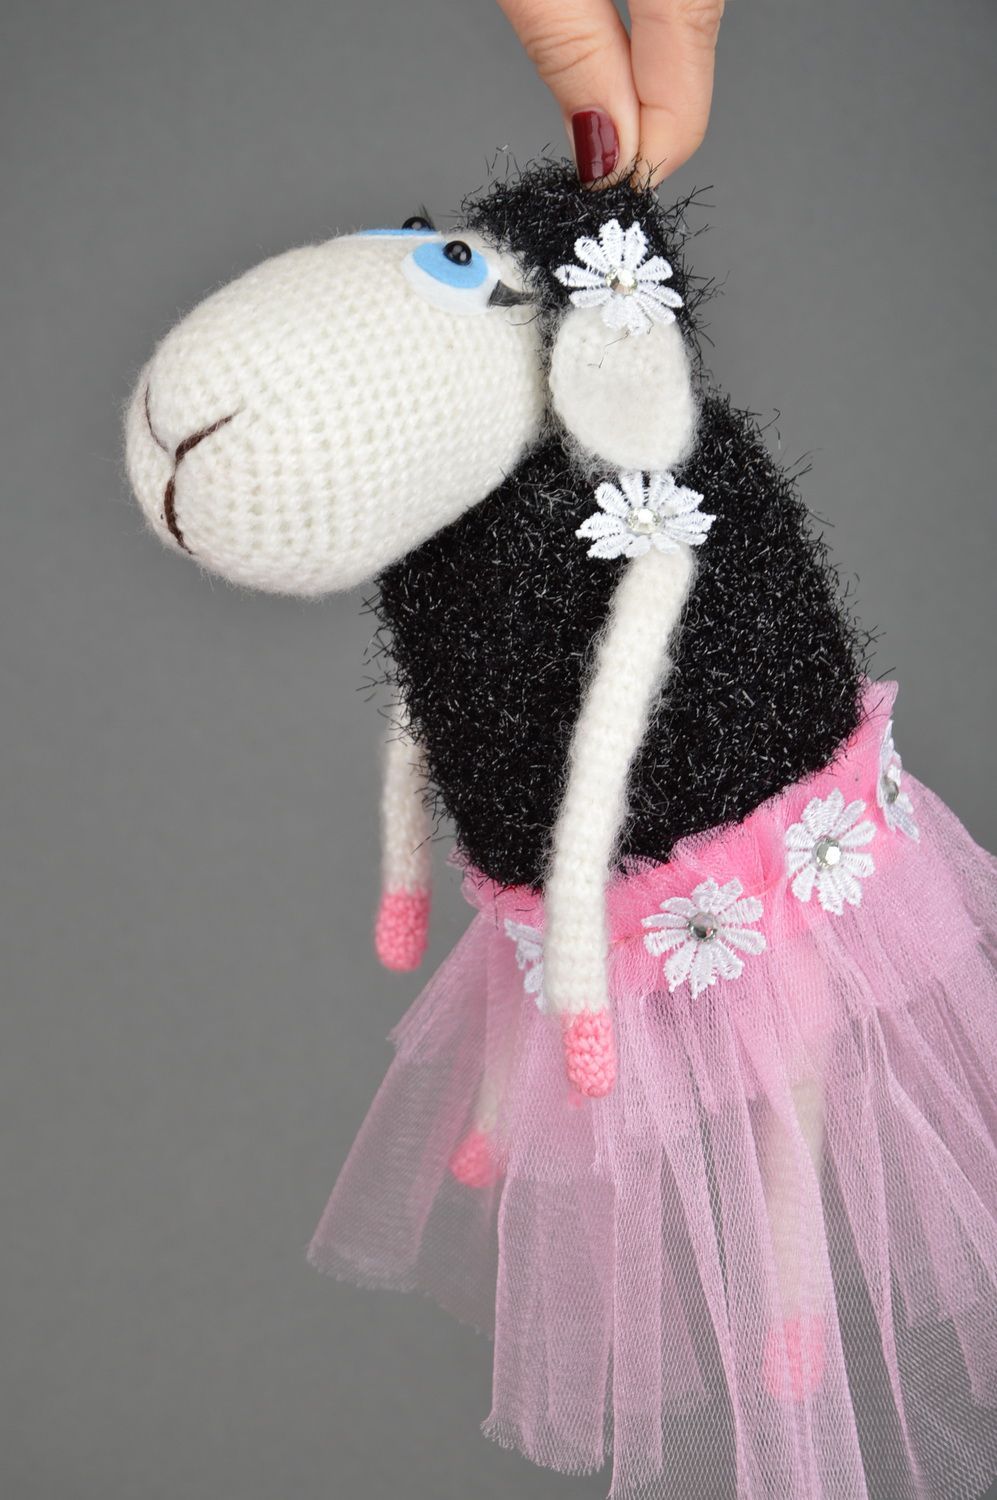 Handmade crocheted soft toy cute black and white lamb in pink tutu skirt photo 3